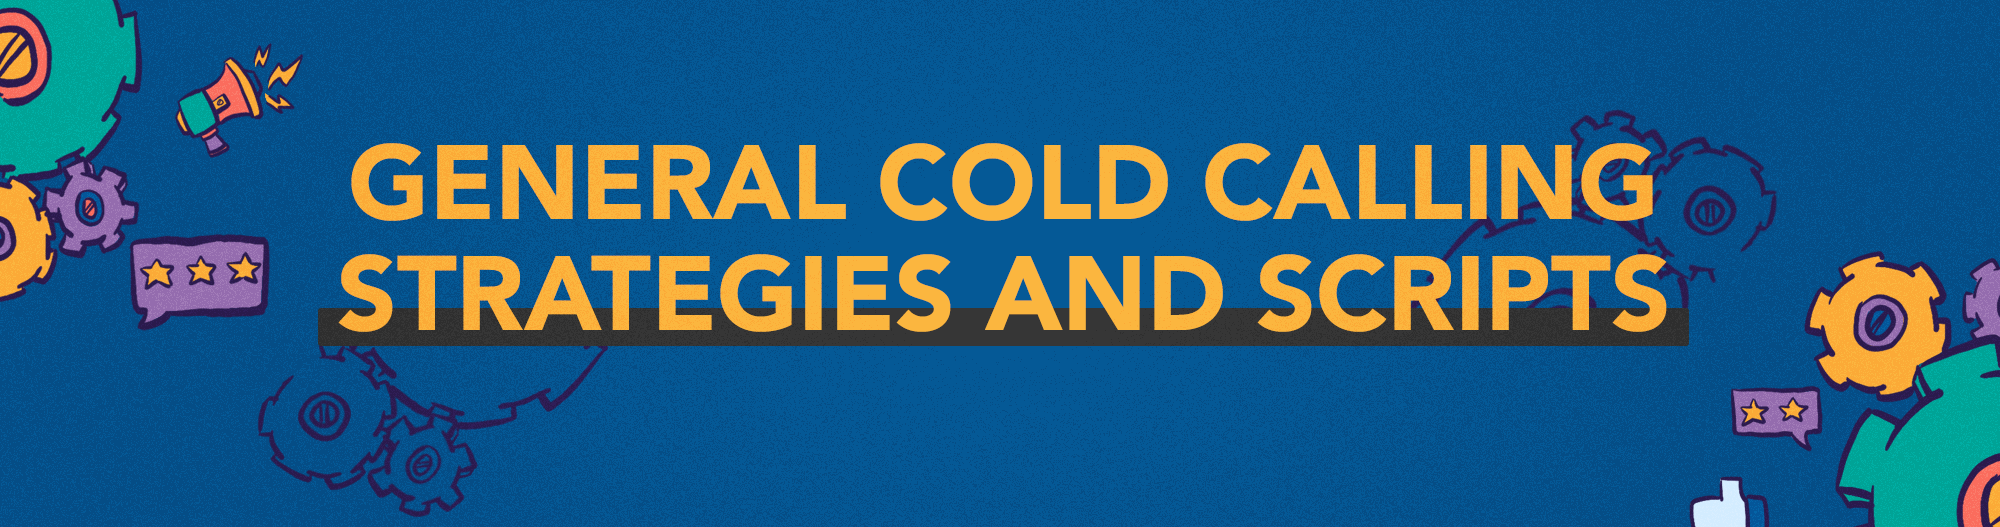 general cold calling strategies